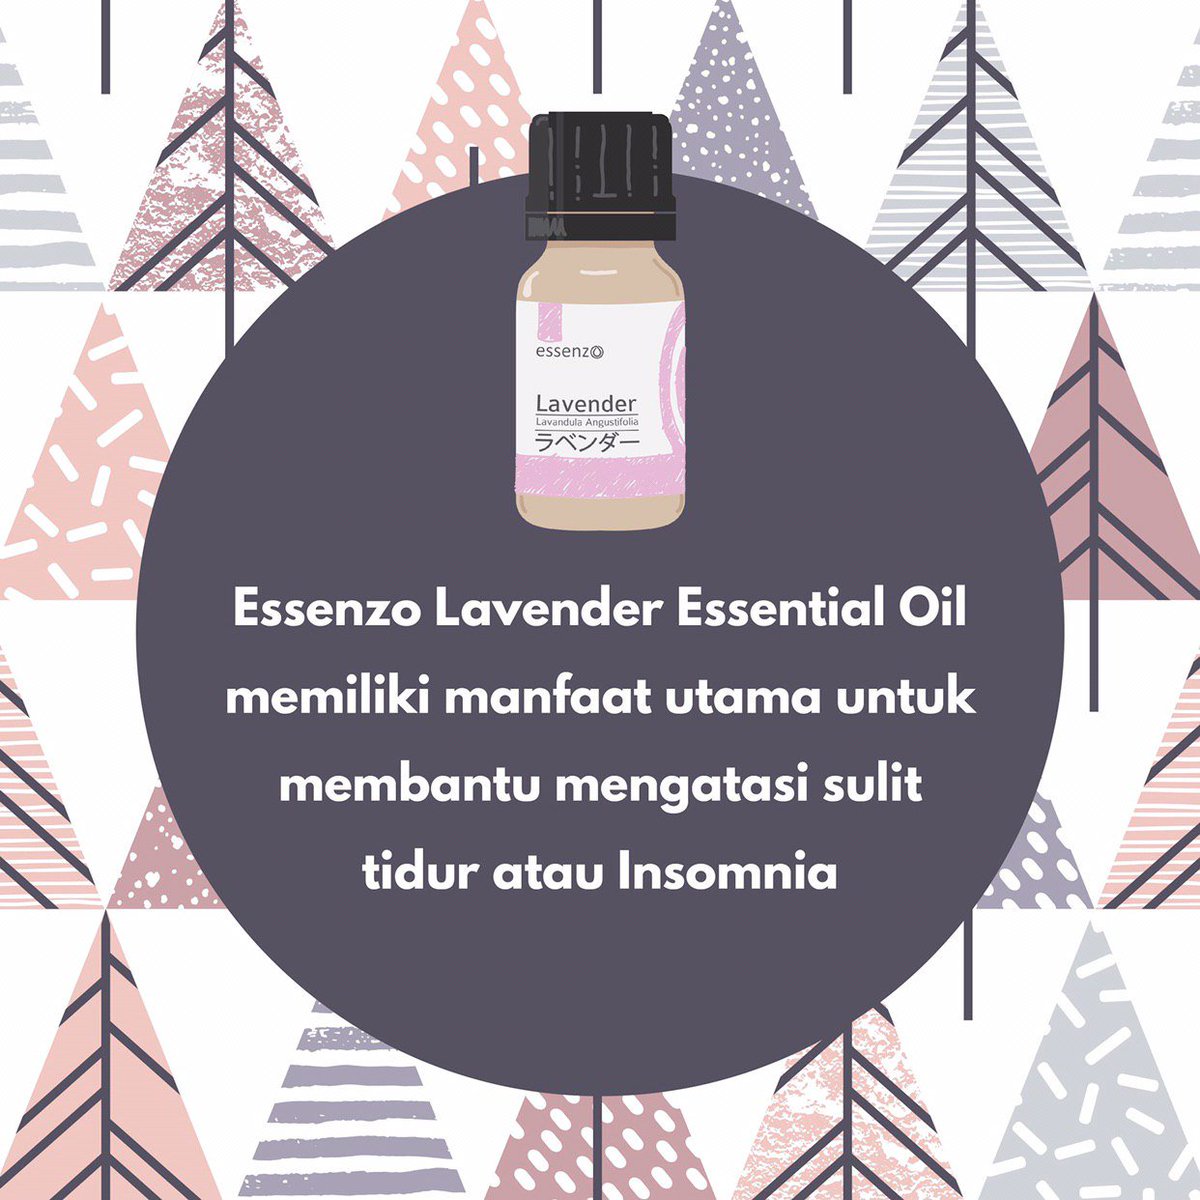 Info lebih lengkap tentang insomnia & Essenzo Lavender Essential Oil, silakan klik link berikut:  bit.ly/OilUntukYangSu…

#Lavender #LavenderOil #Insomnia #SolusiInsomniaAnak #SolusiTidurNyenyak #SolusiSusahTidur #AlamiHerbal #Praktis #EssentialOil #Essenzo